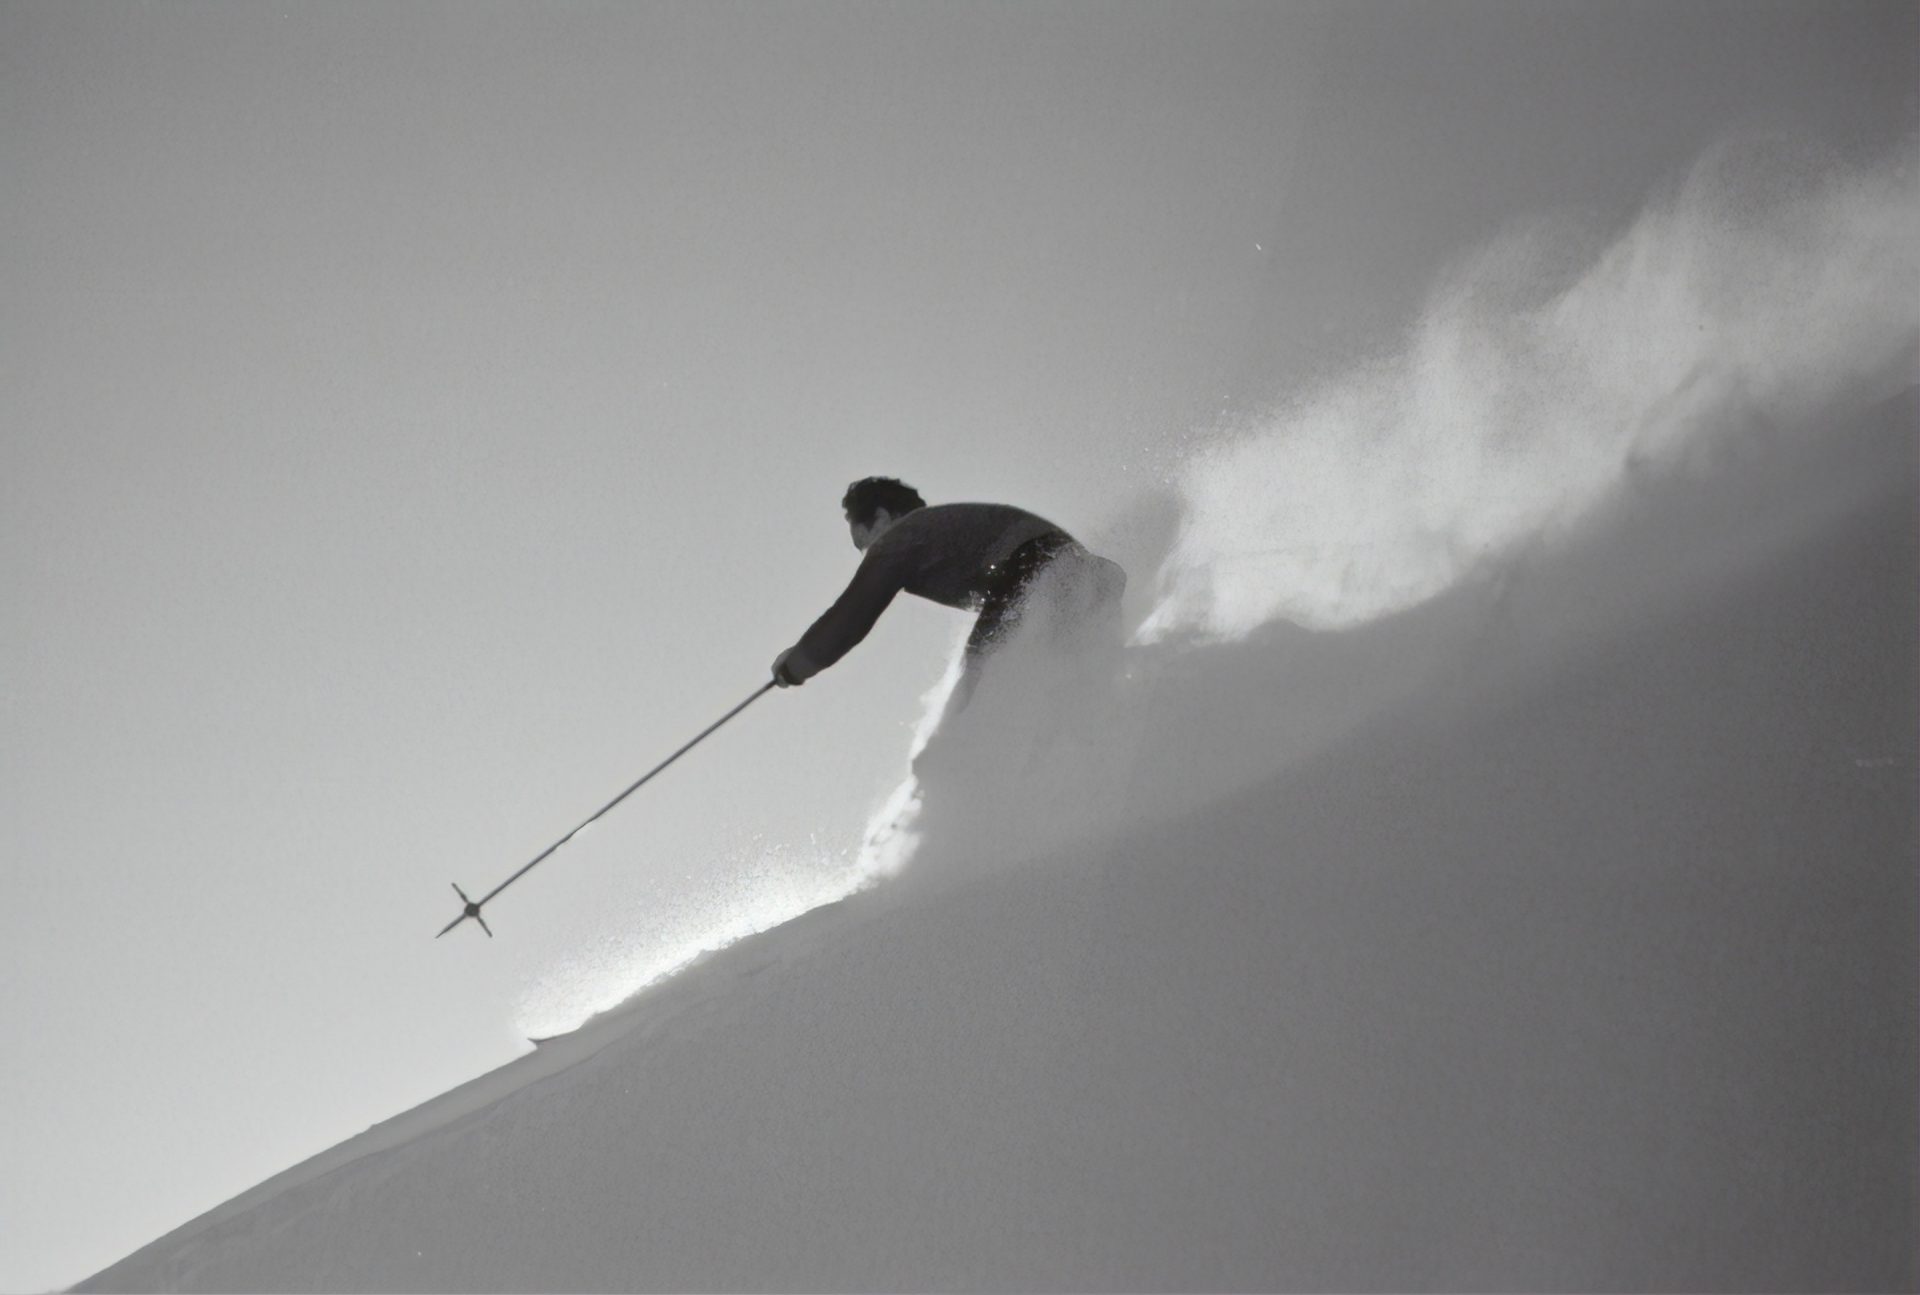 Skiing history